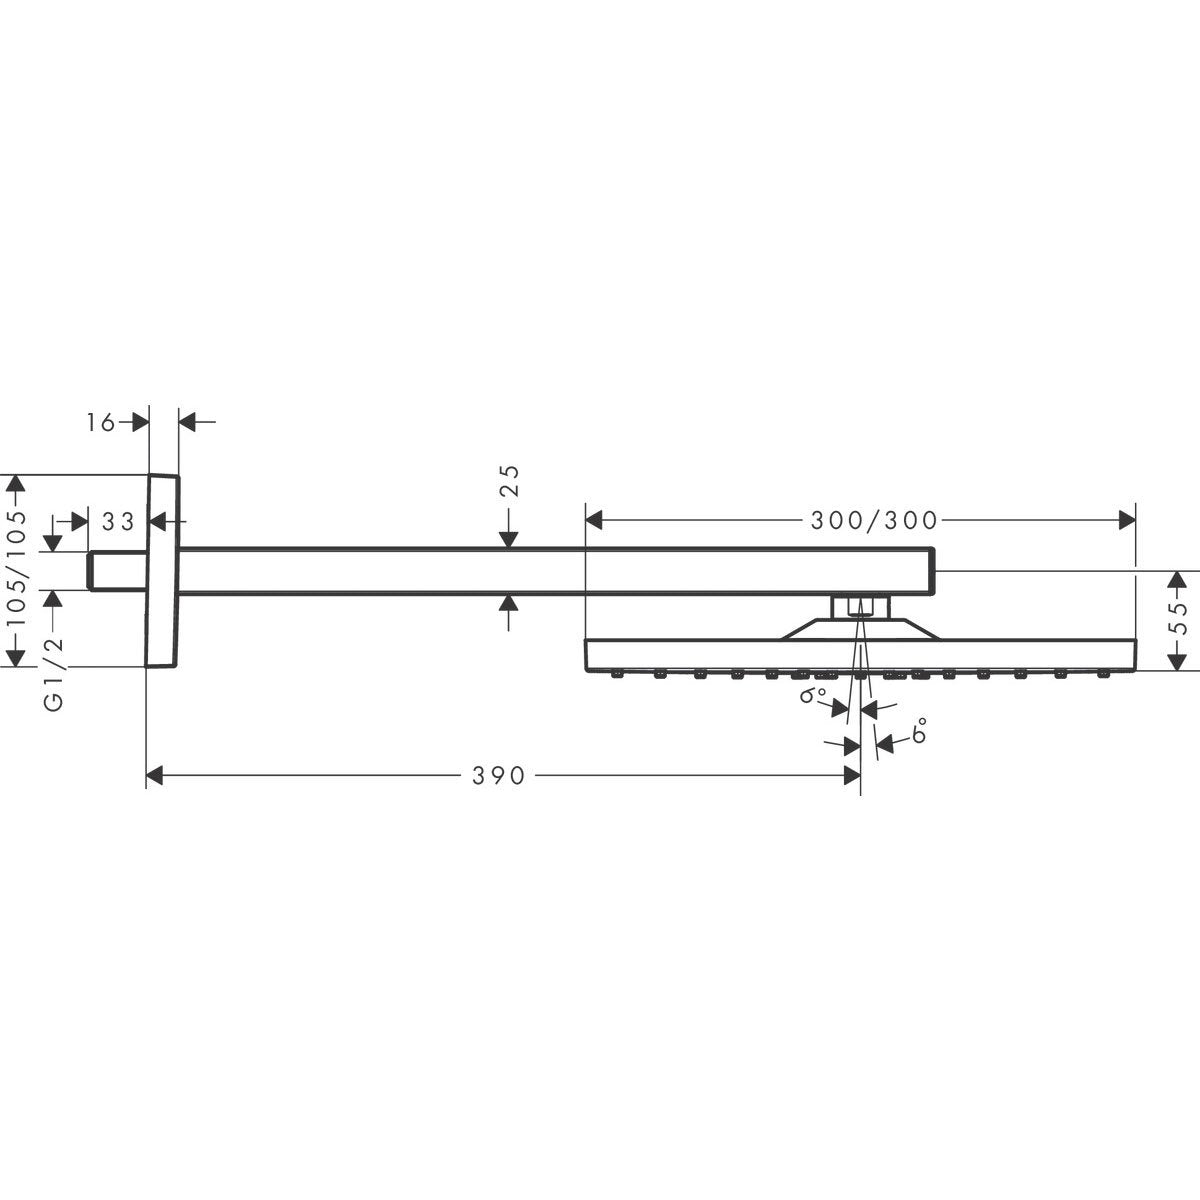 hansgrohe rail kit handset dimensions